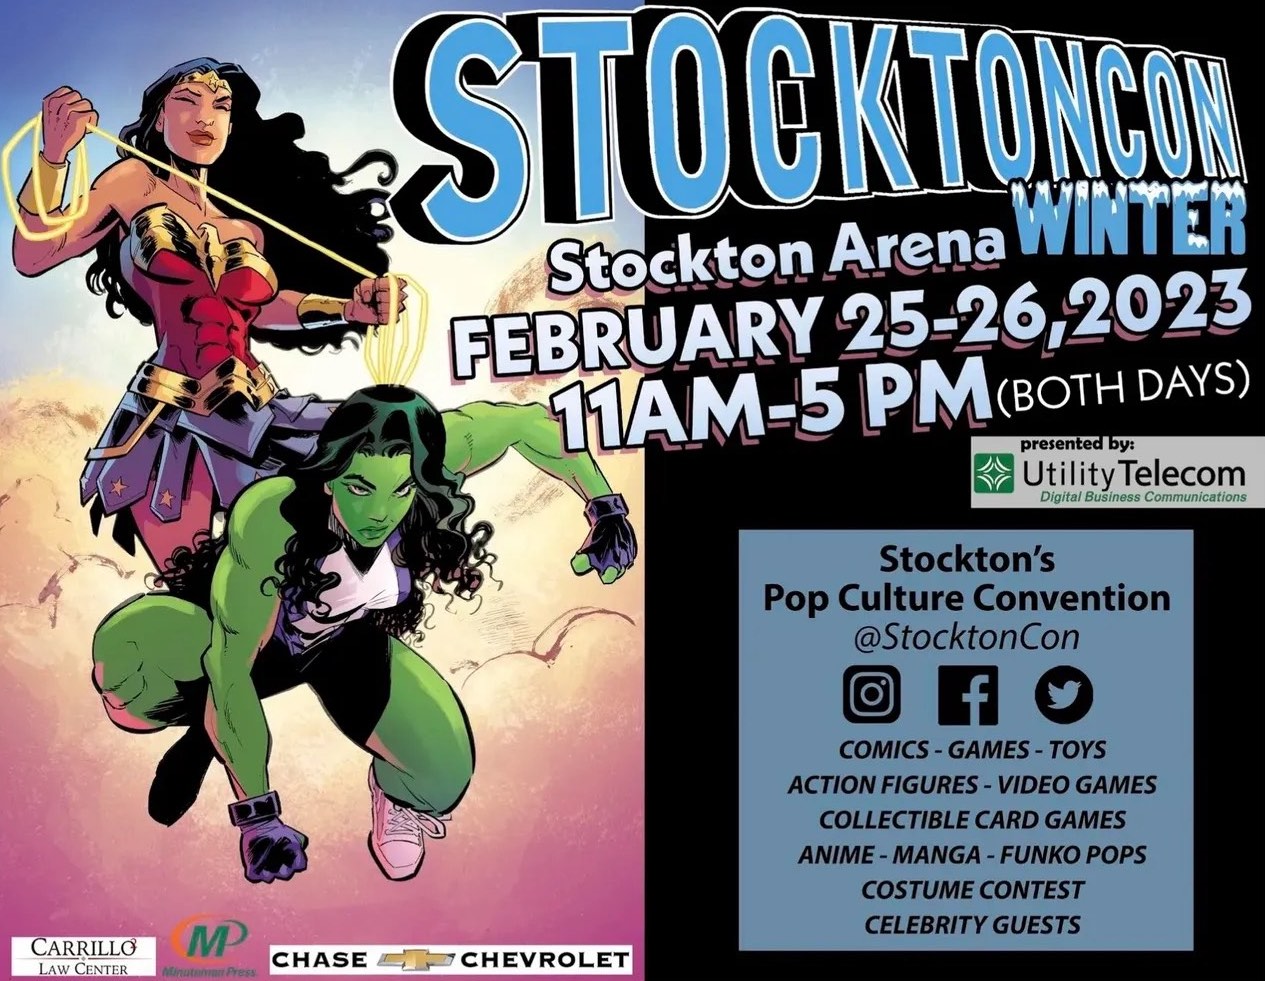 StocktonCon Winter - Sunday at Stockton Arena